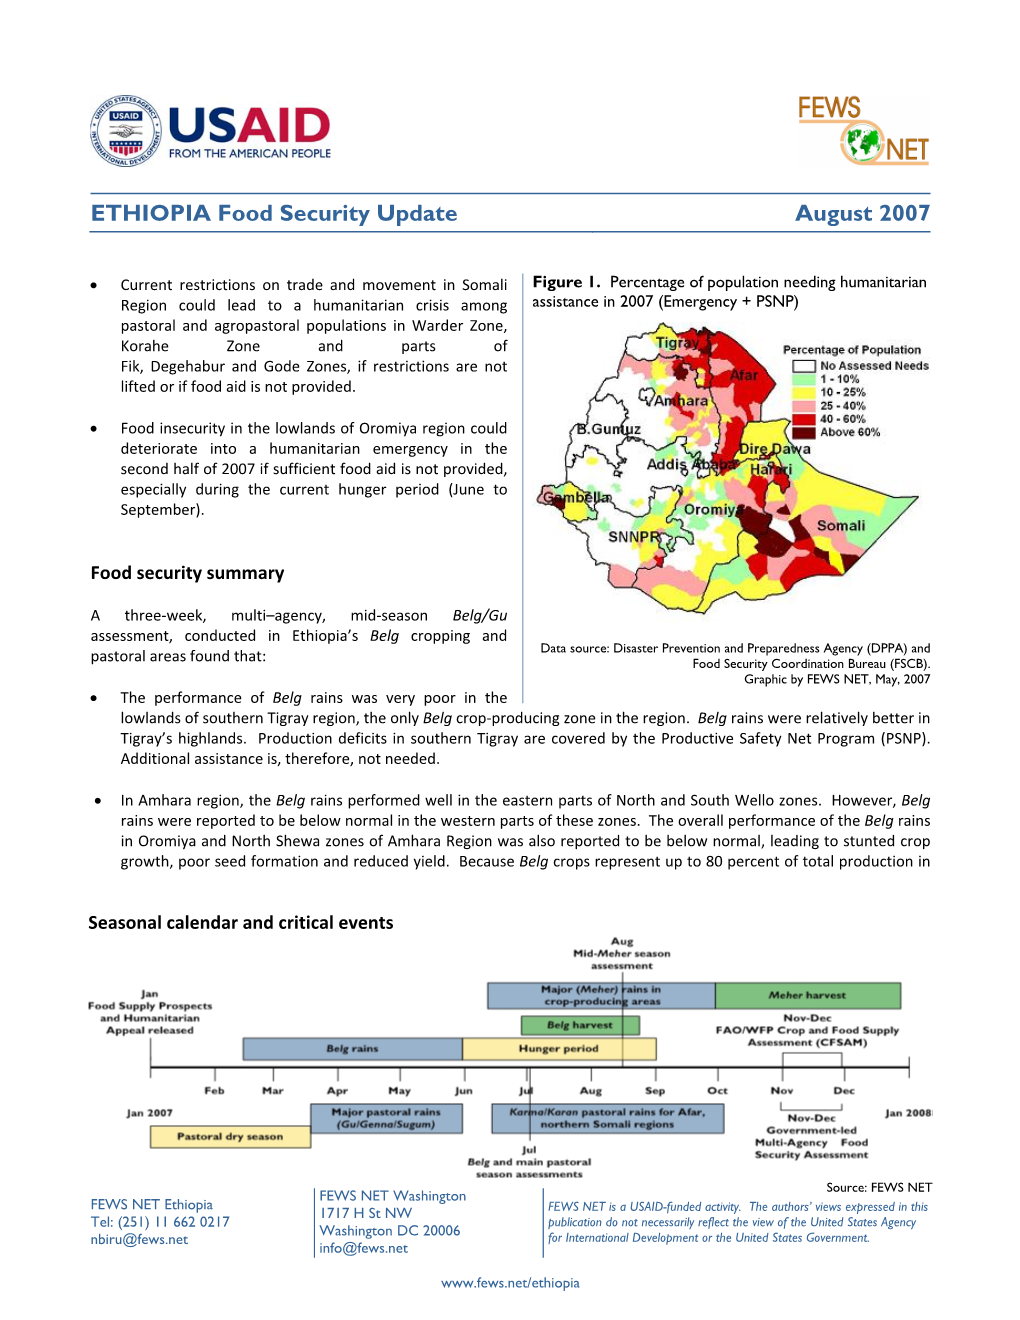 Ethiopia Food Security Update, August 2007